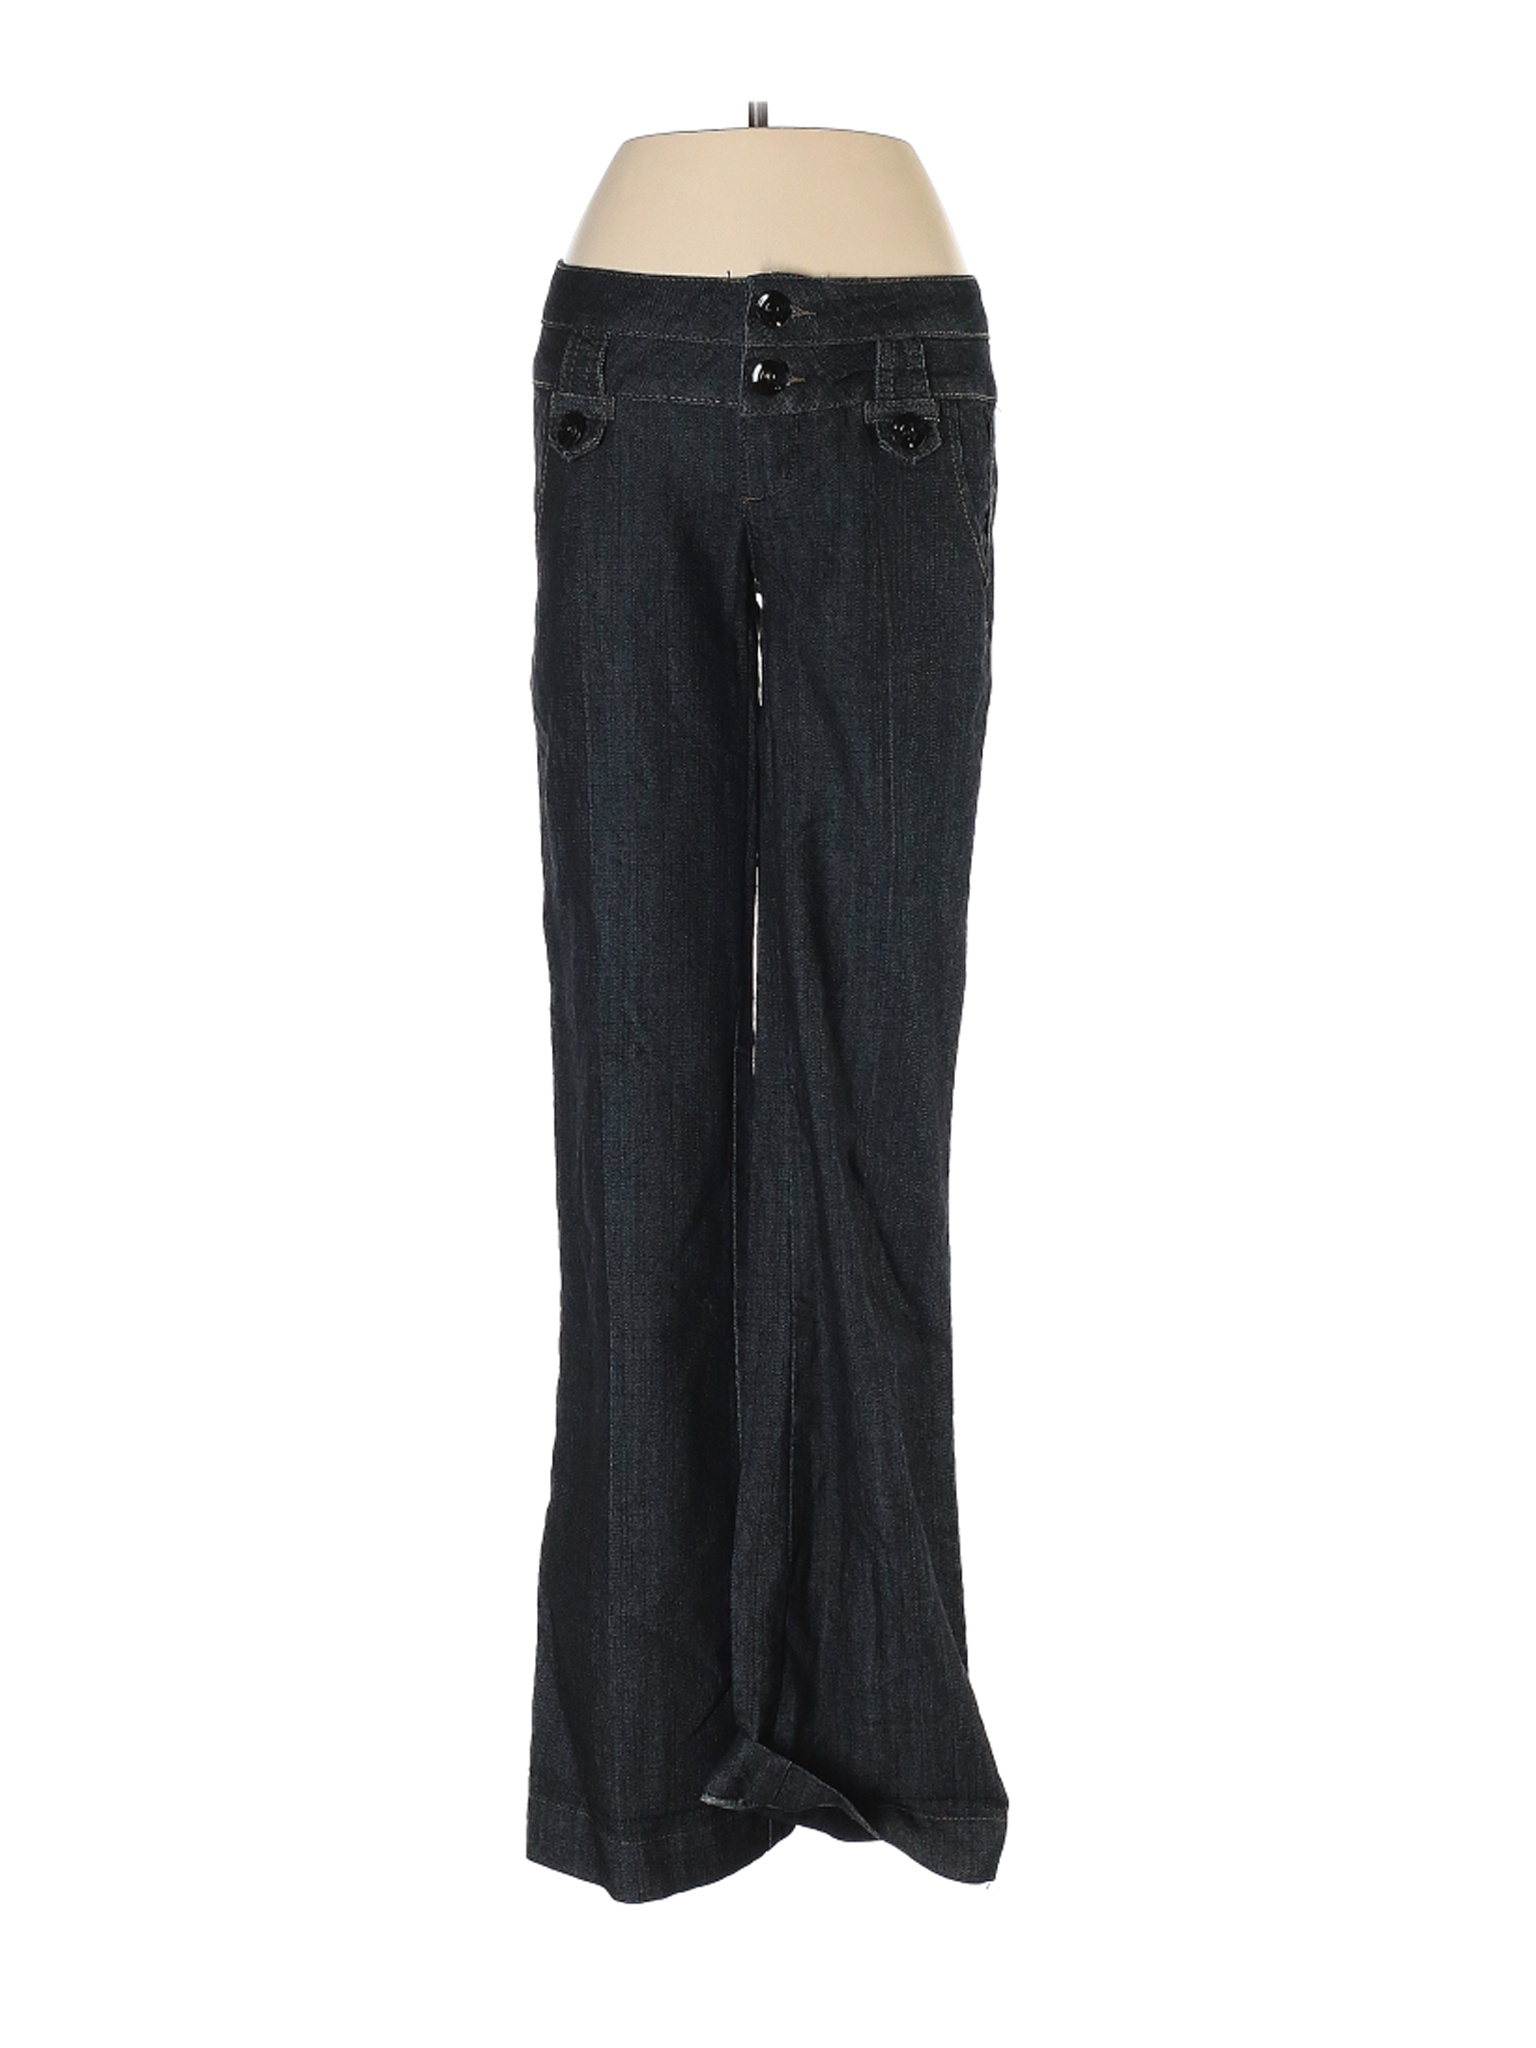 Boom Boom Women Black Jeans 1 | eBay